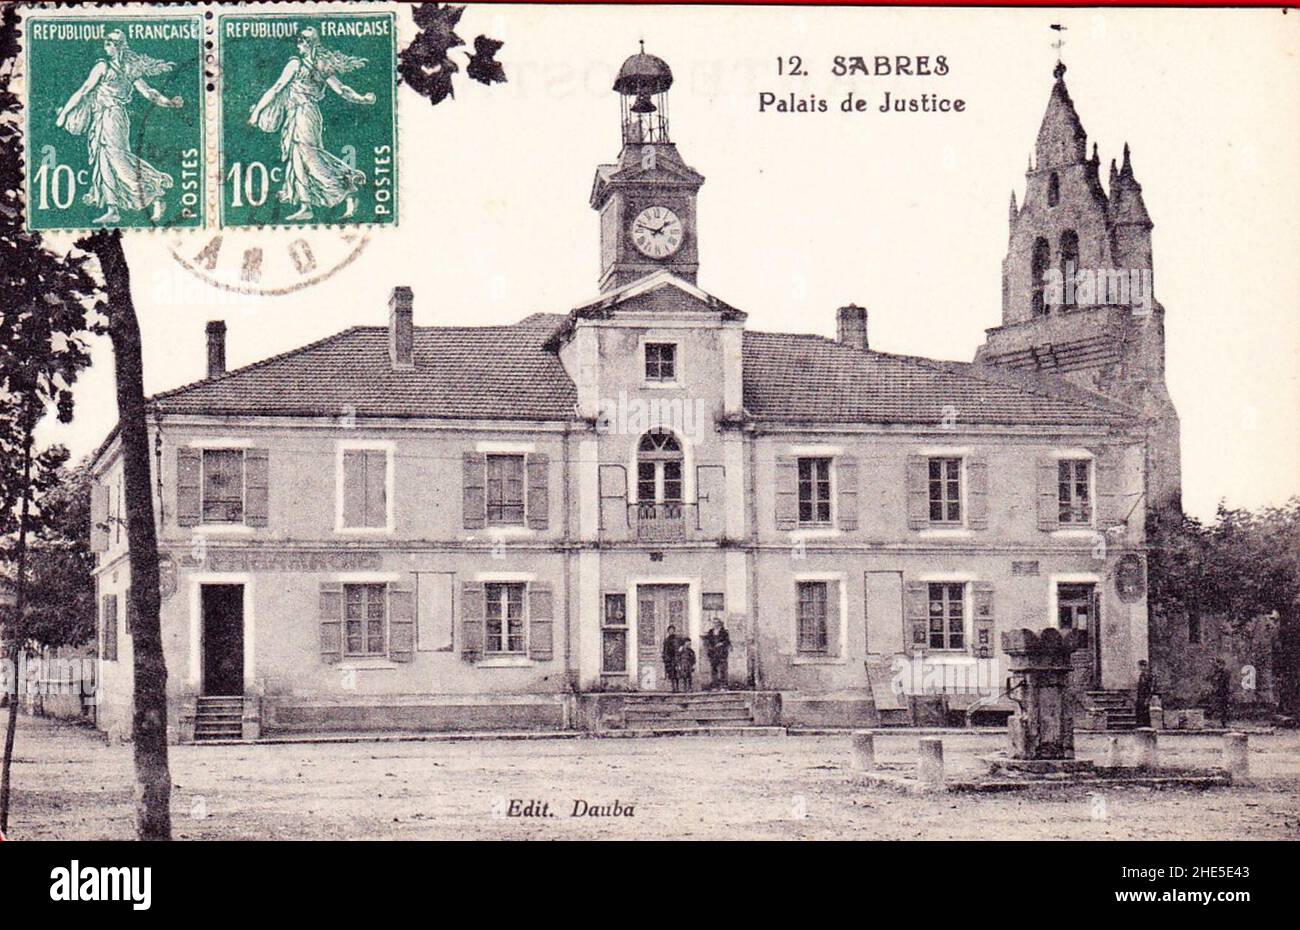 Sabres - Palais de Justice. Stock Photo